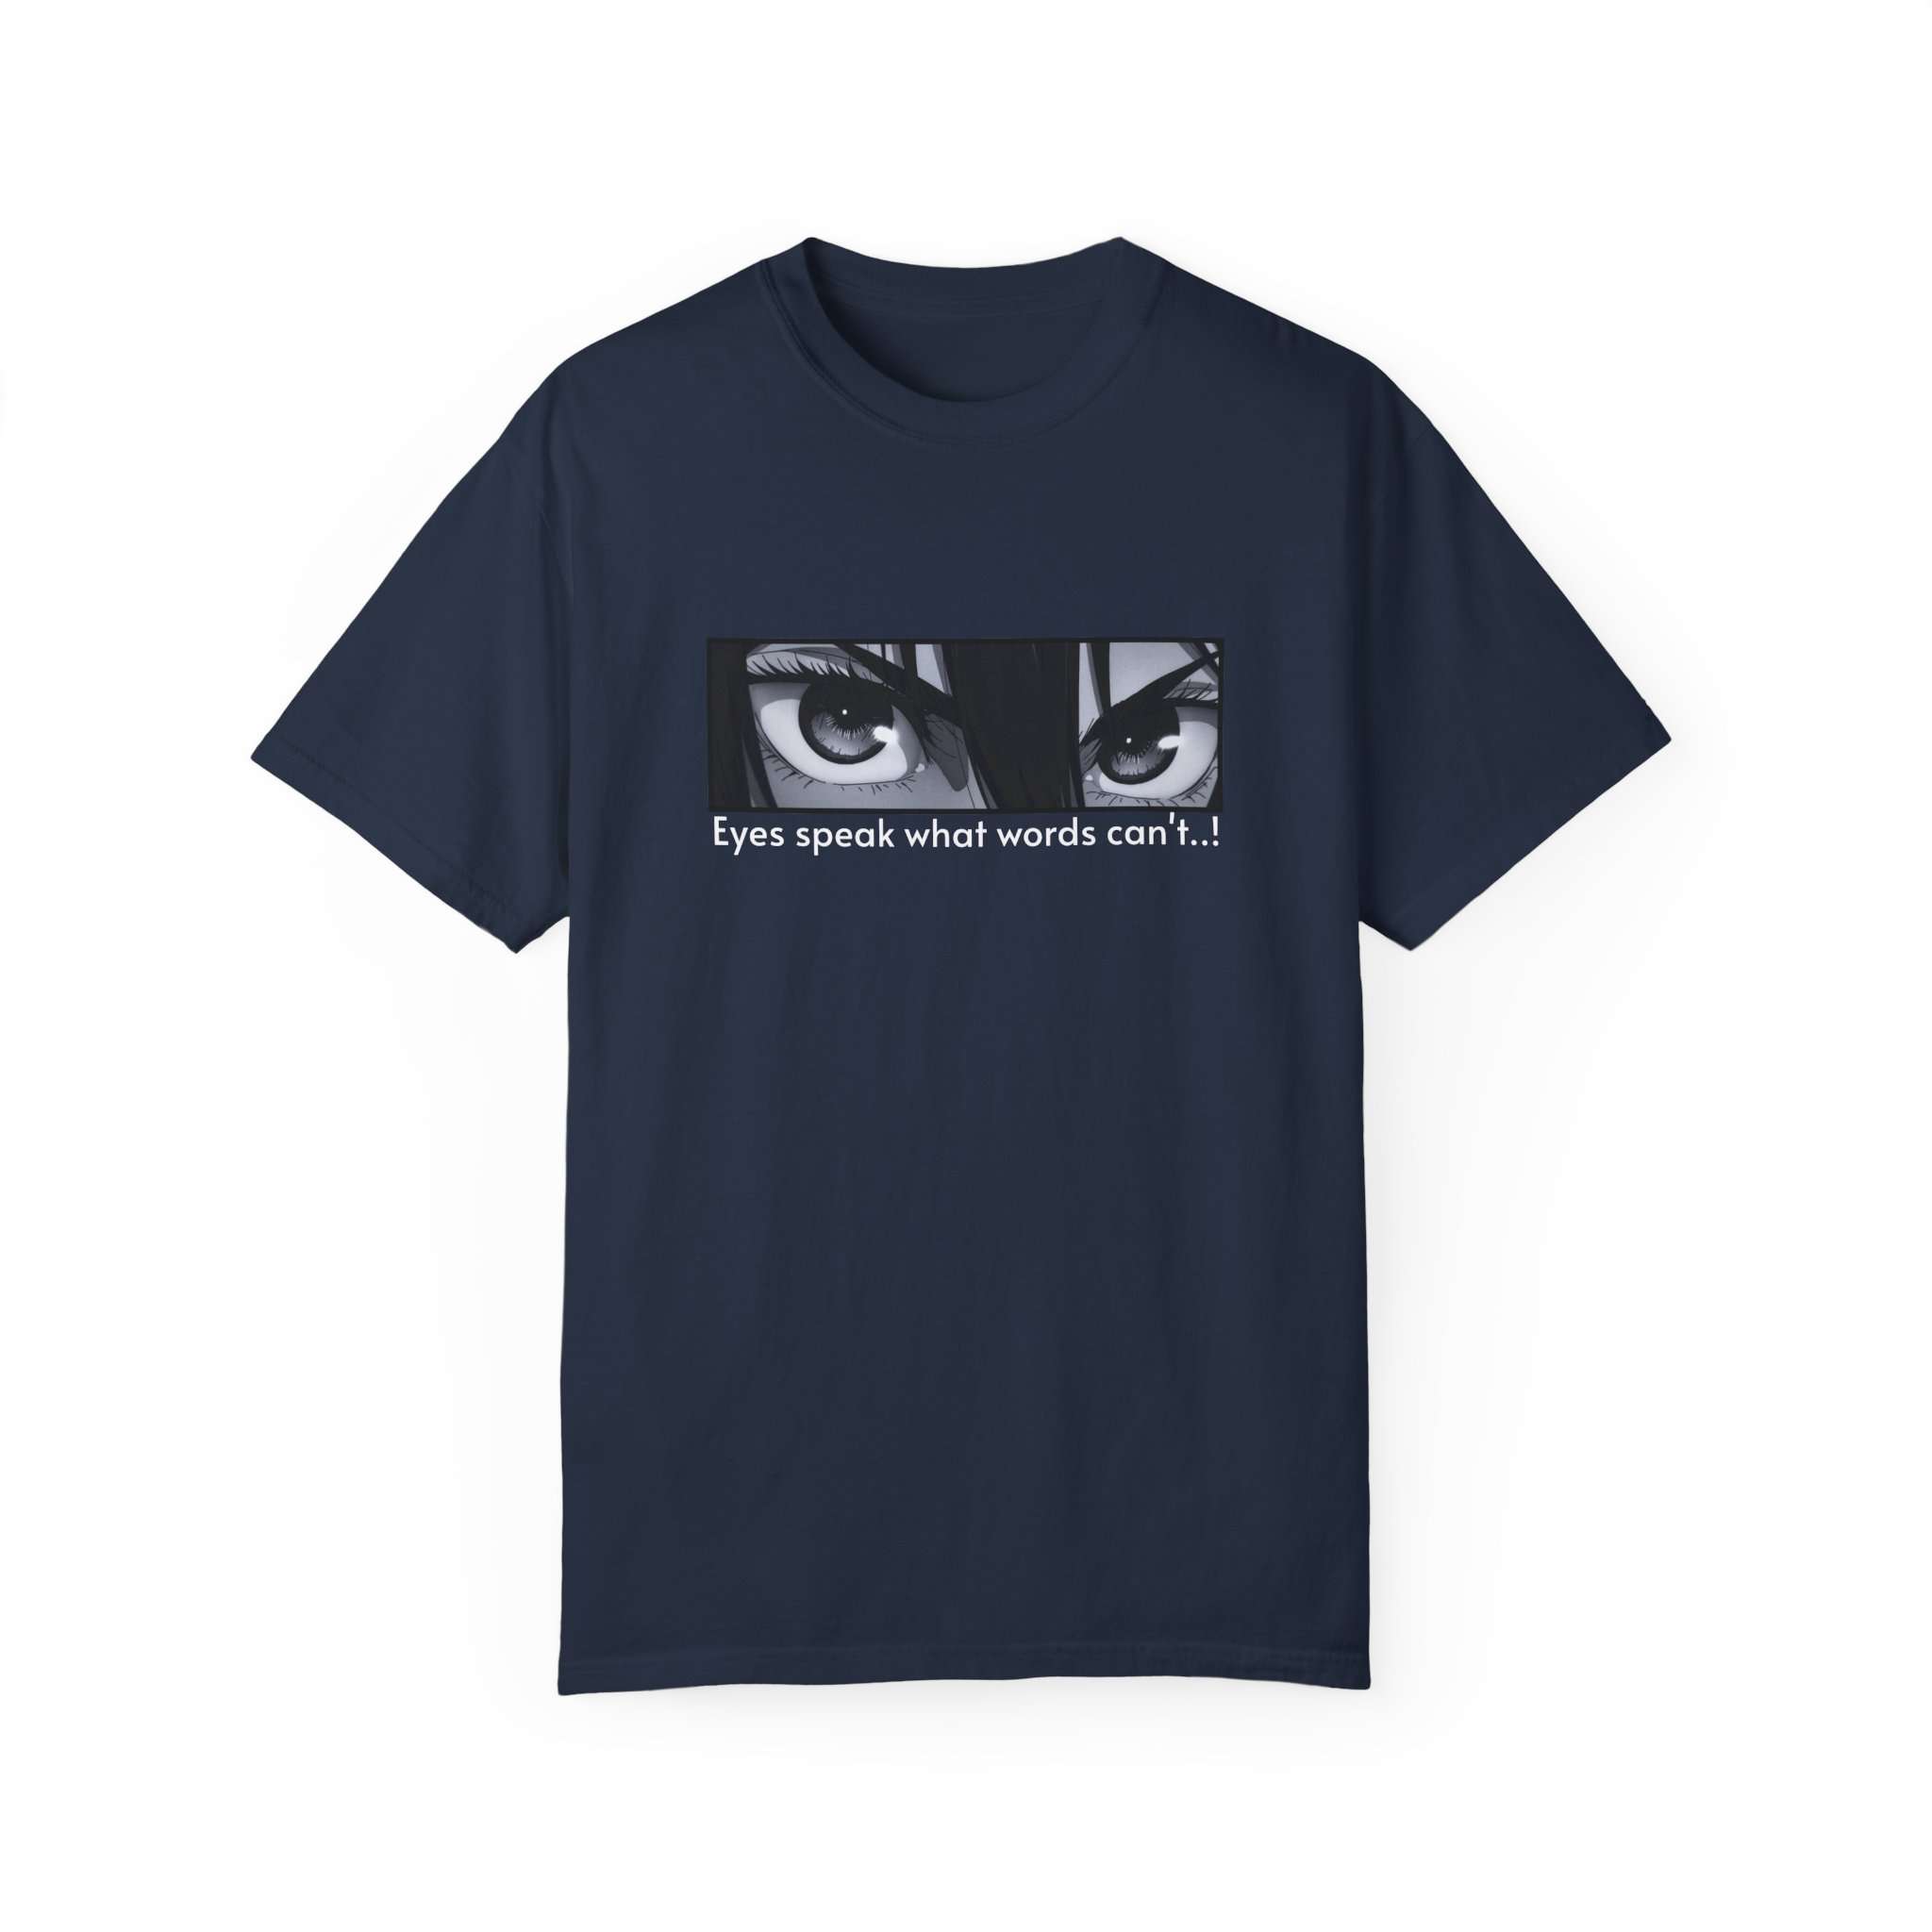 Riko Amanai Design Unisex Garment-Dyed T-shirt